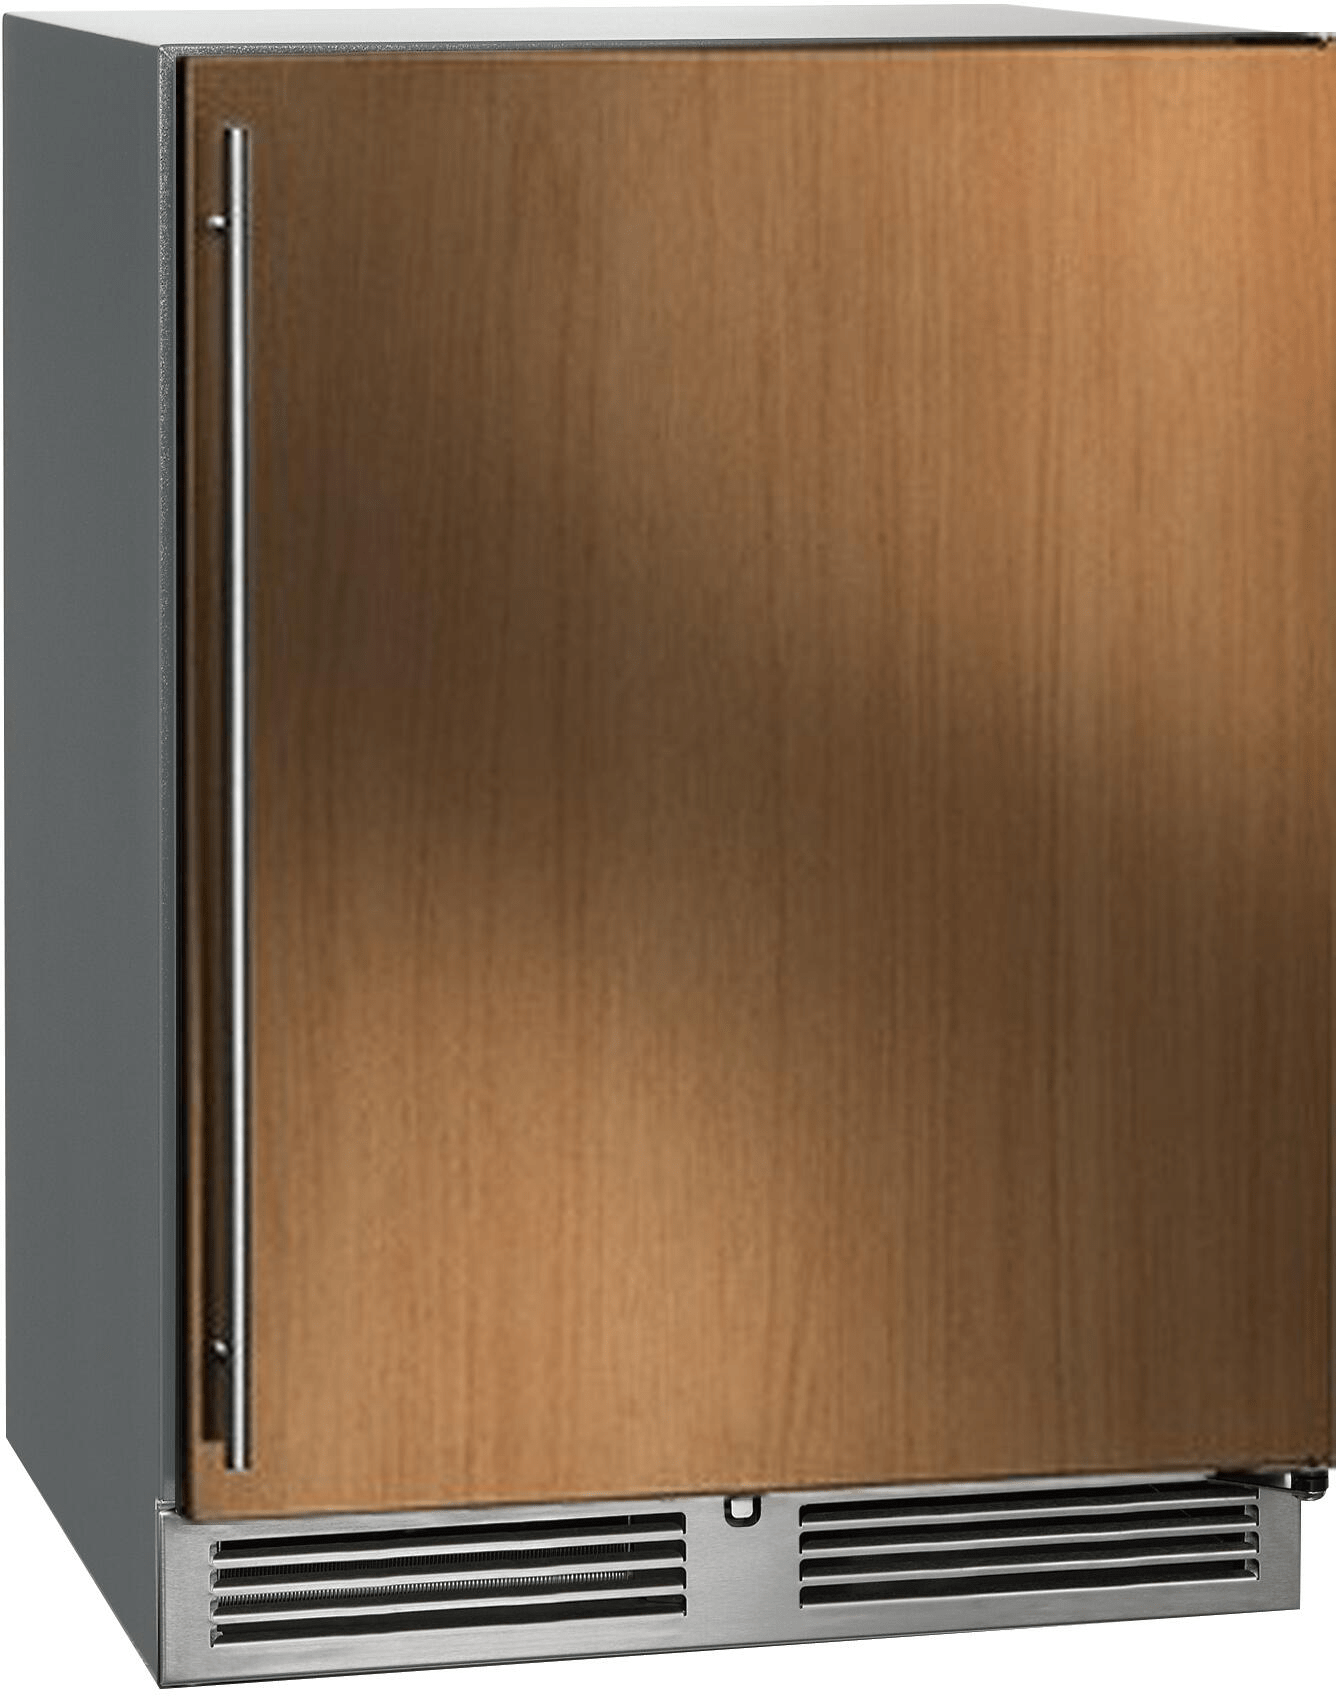 Perlick 24 Signature Series Shallow Depth Refrigerator - Outdoor Model, Stainless Steel Solid Door / Right